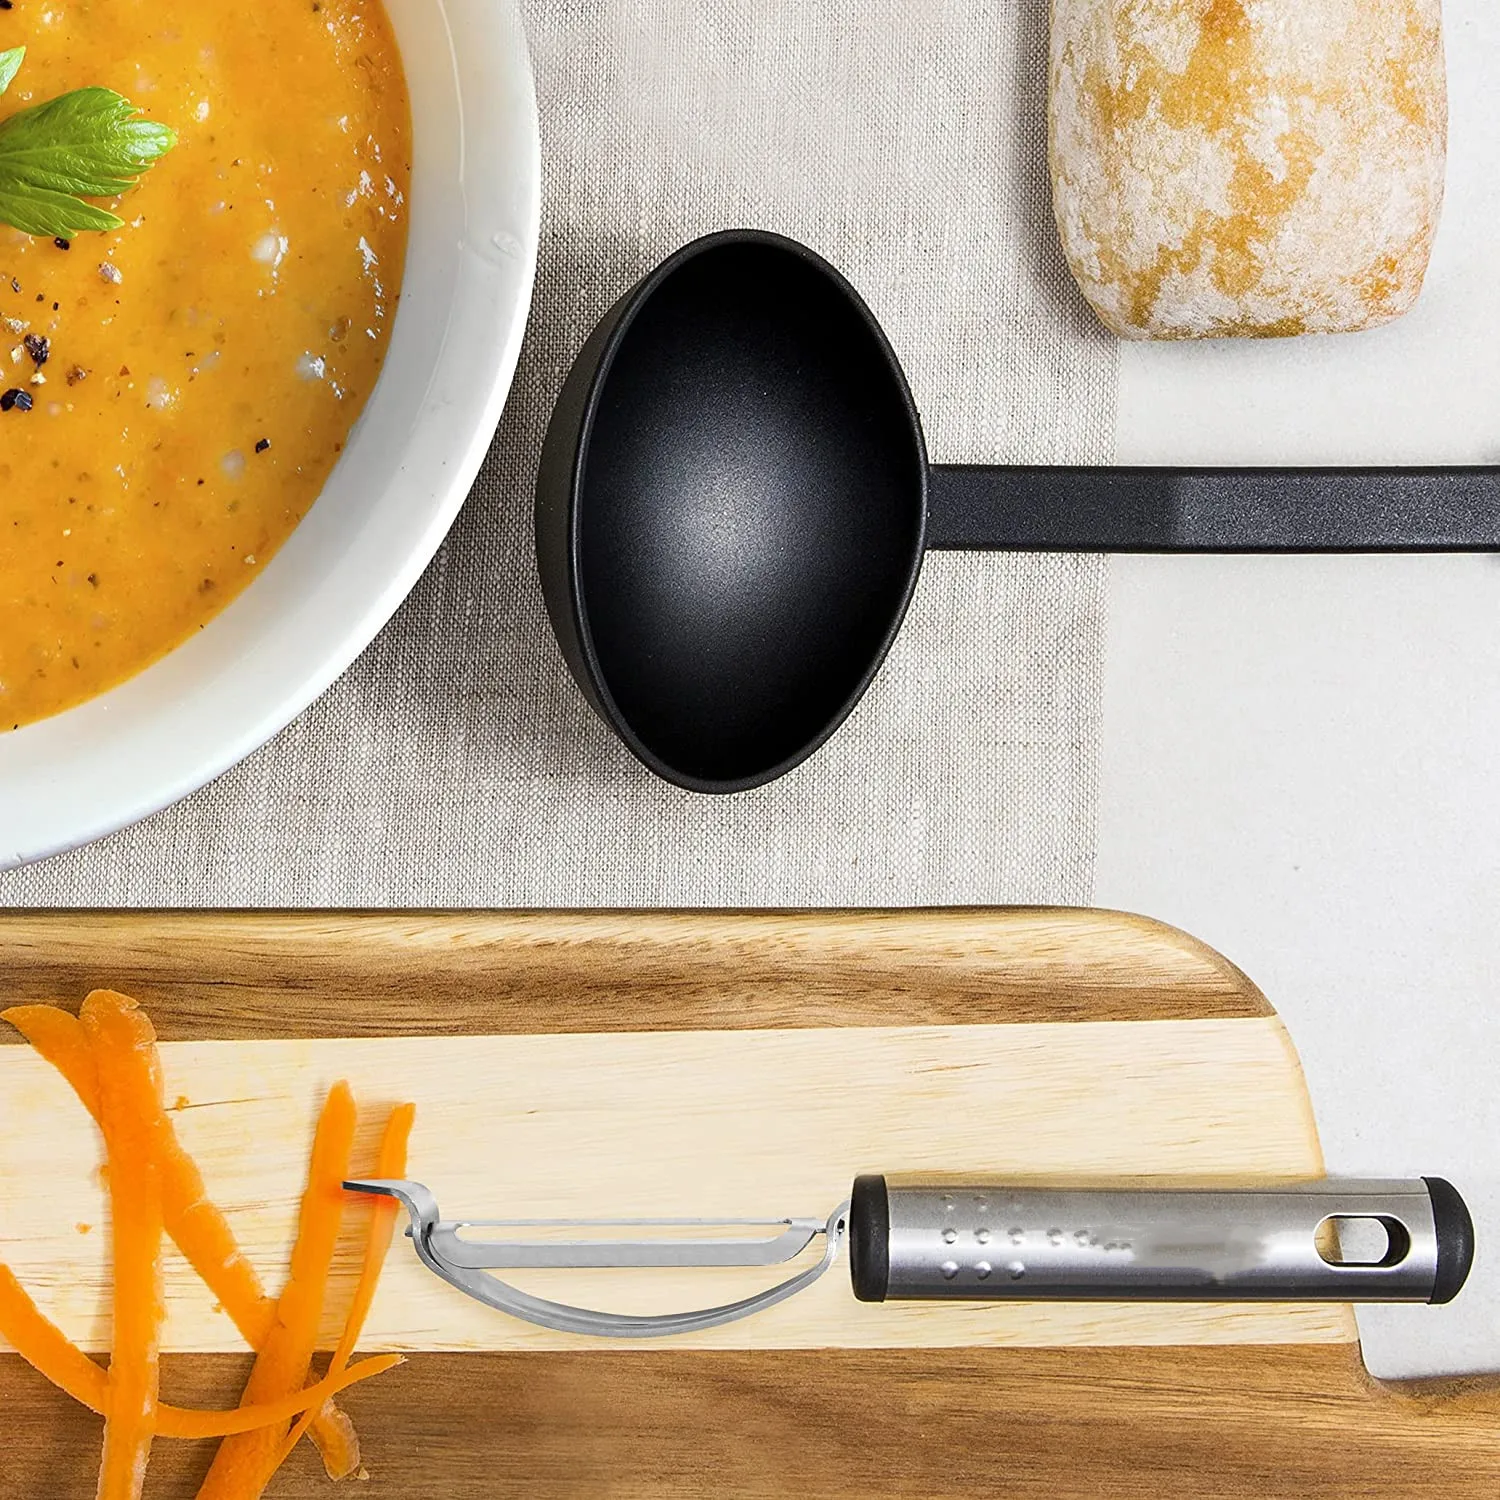 Kitchen Cookware Gadgets Tool Nylon Set of 23 Pcs - HomeHero